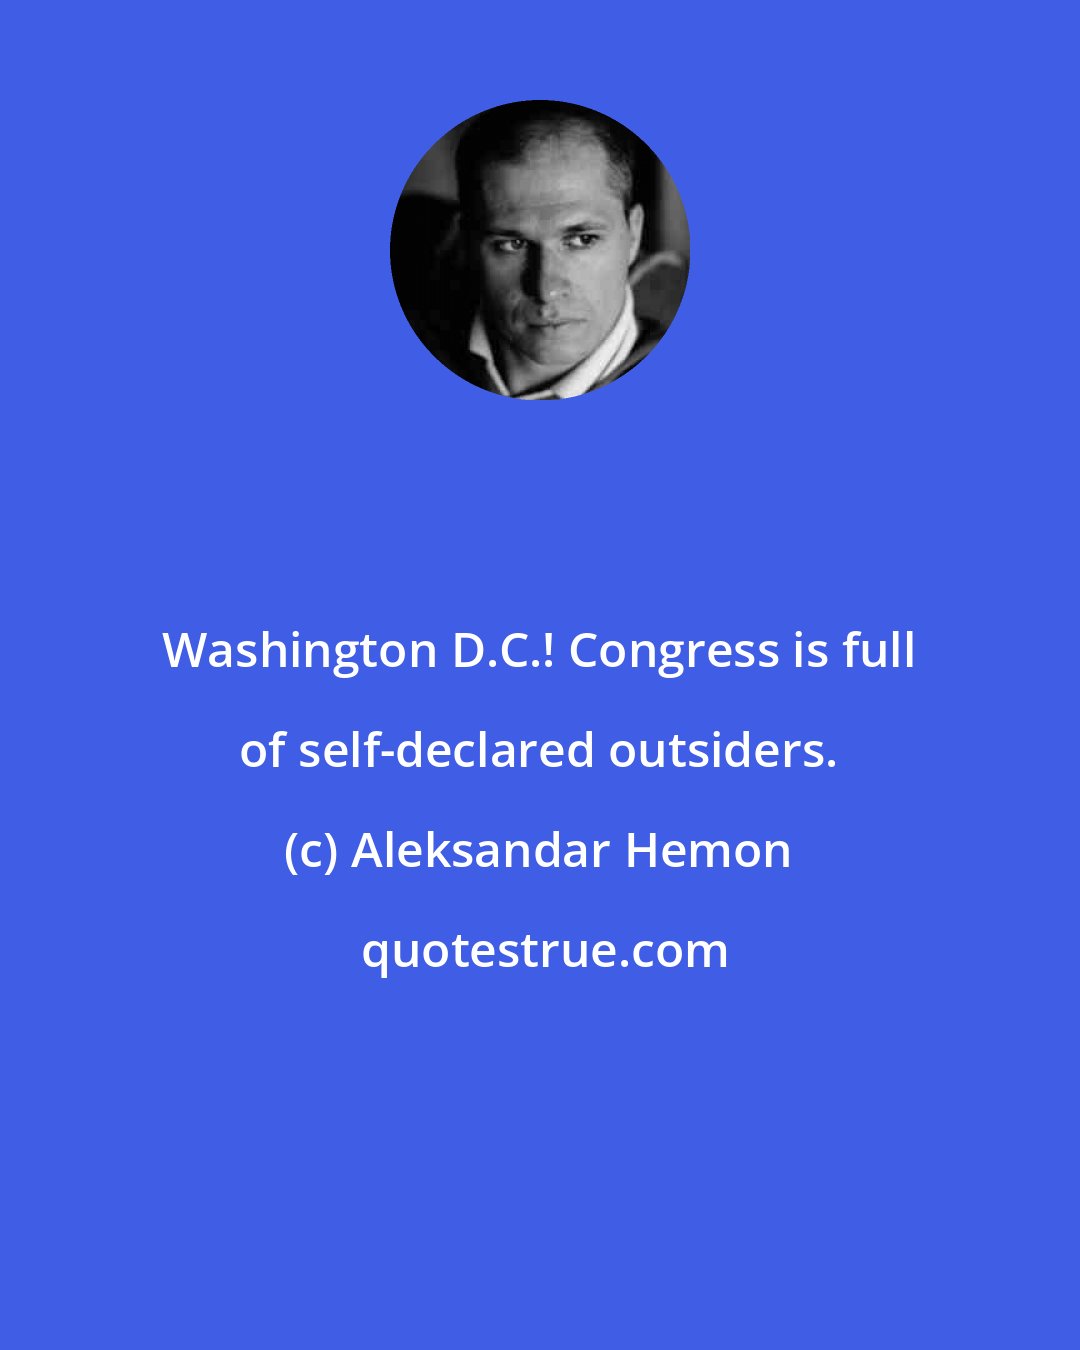 Aleksandar Hemon: Washington D.C.! Congress is full of self-declared outsiders.